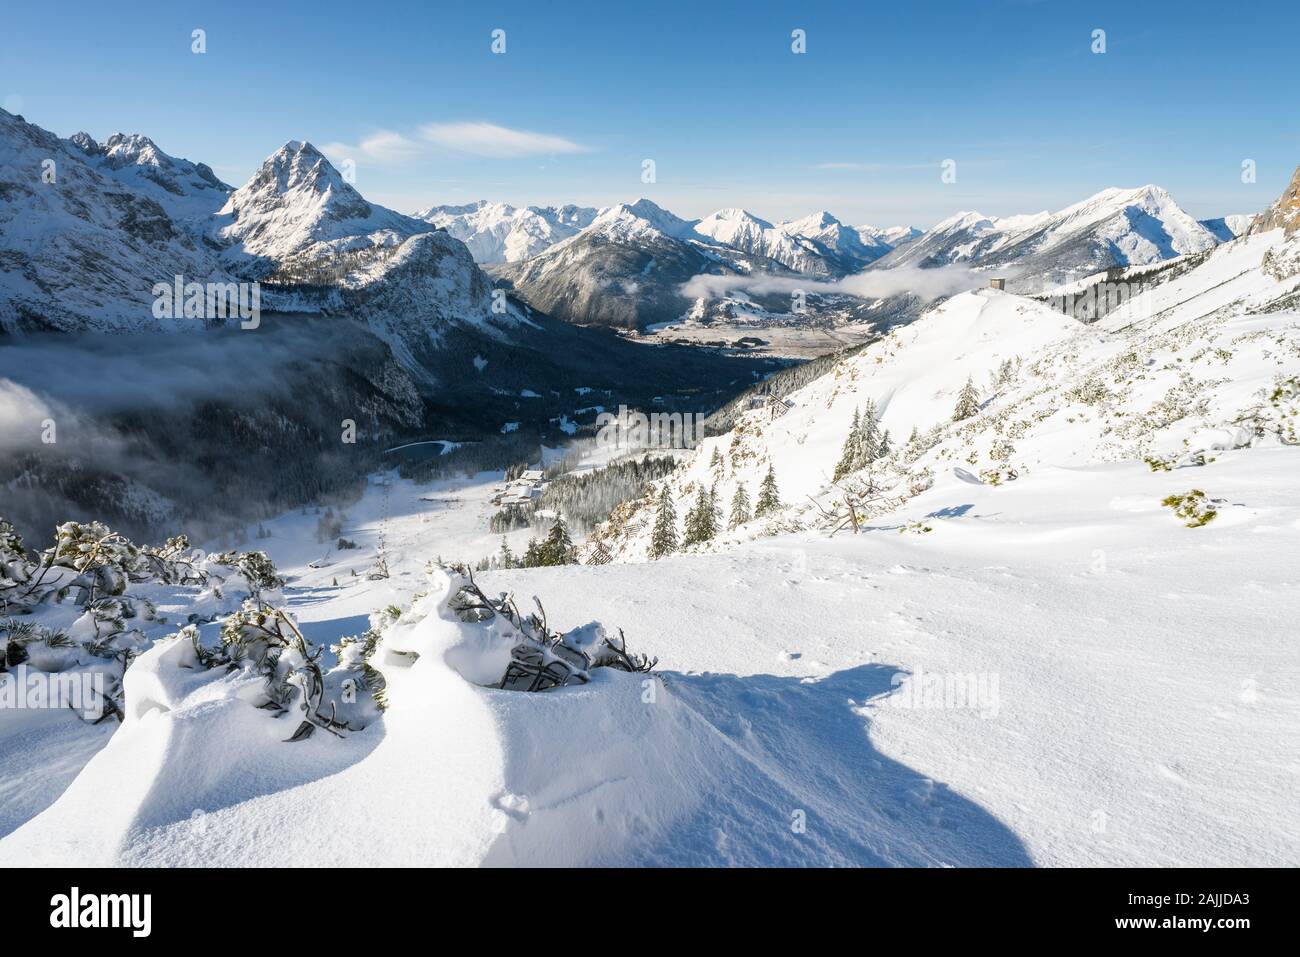 Winter panorama of the Ehrwald basin, Ehrwalder Sonnenspitze, Wetterstein massif, Ammergau and Lechtal Alps from the Mount Issentalkopf, Austria Stock Photo